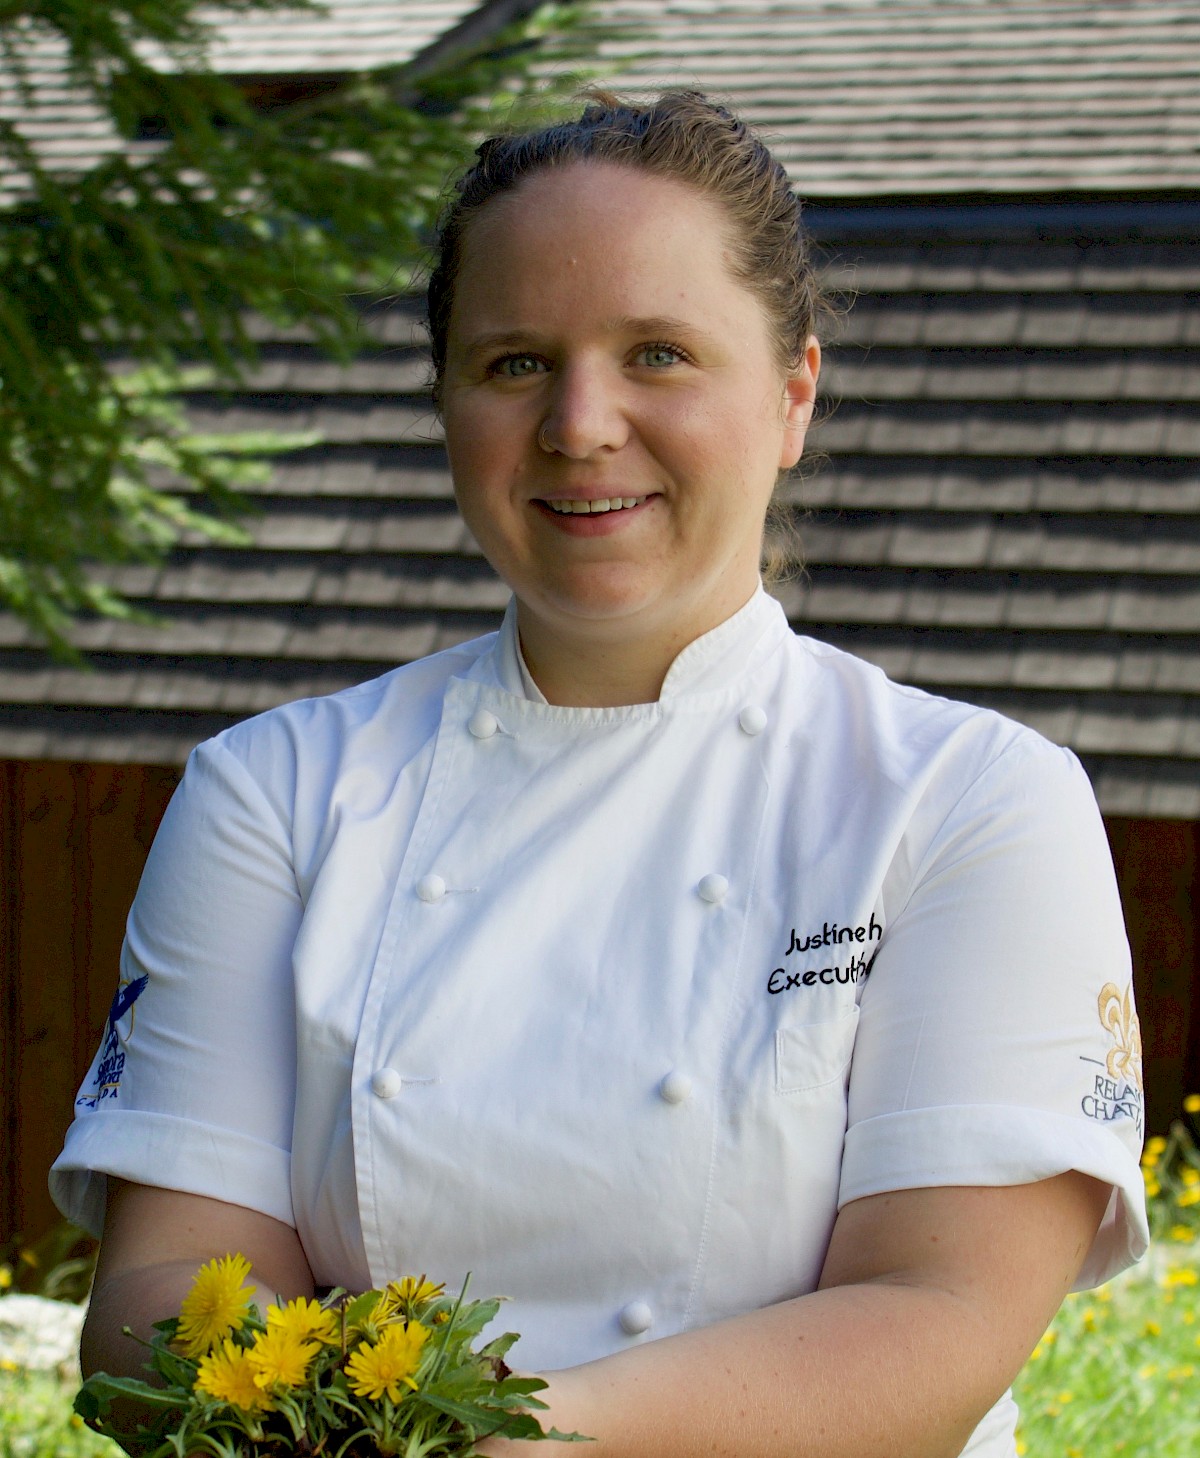 Sonora Resort Executive Chef Justine Smith